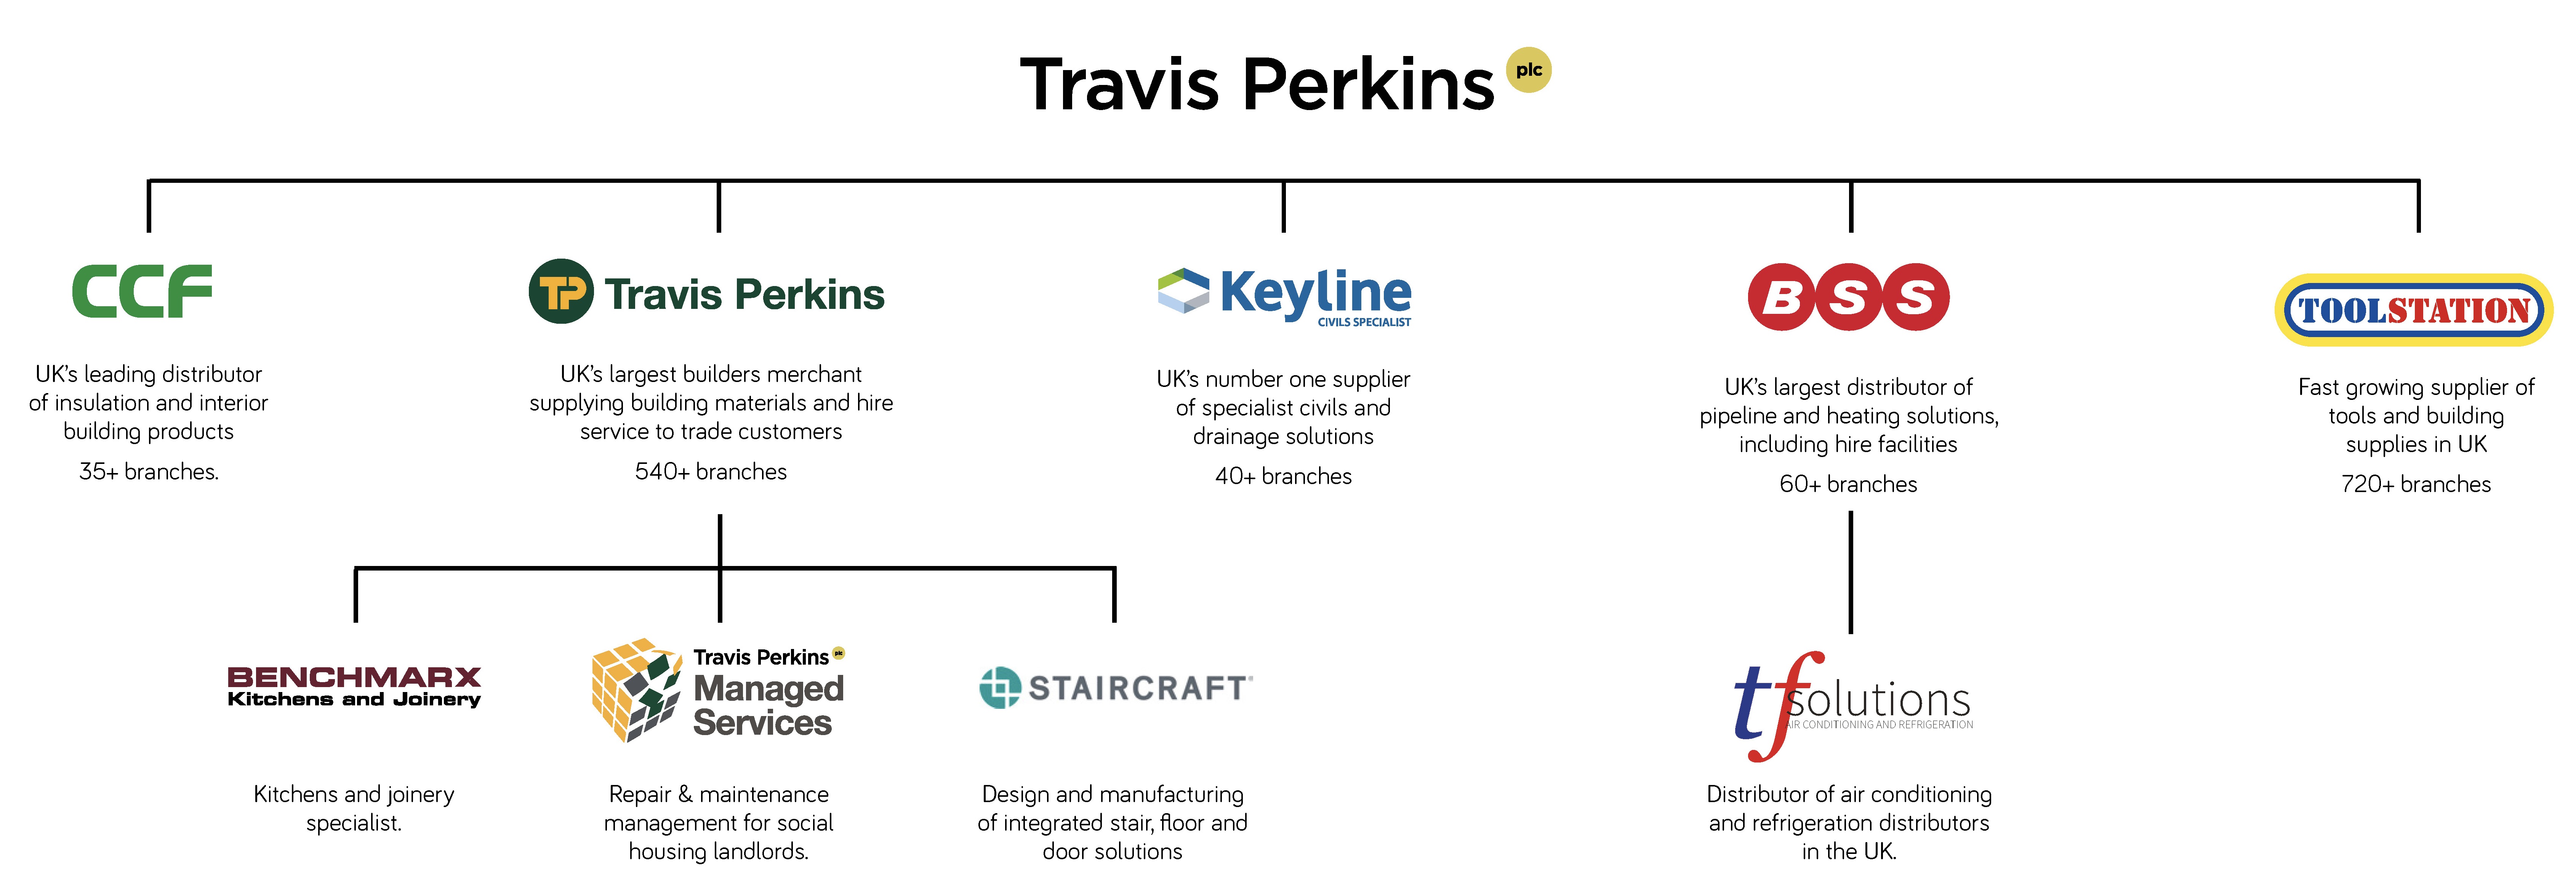 Image shows Travis Perkins plc brand Hierarchy